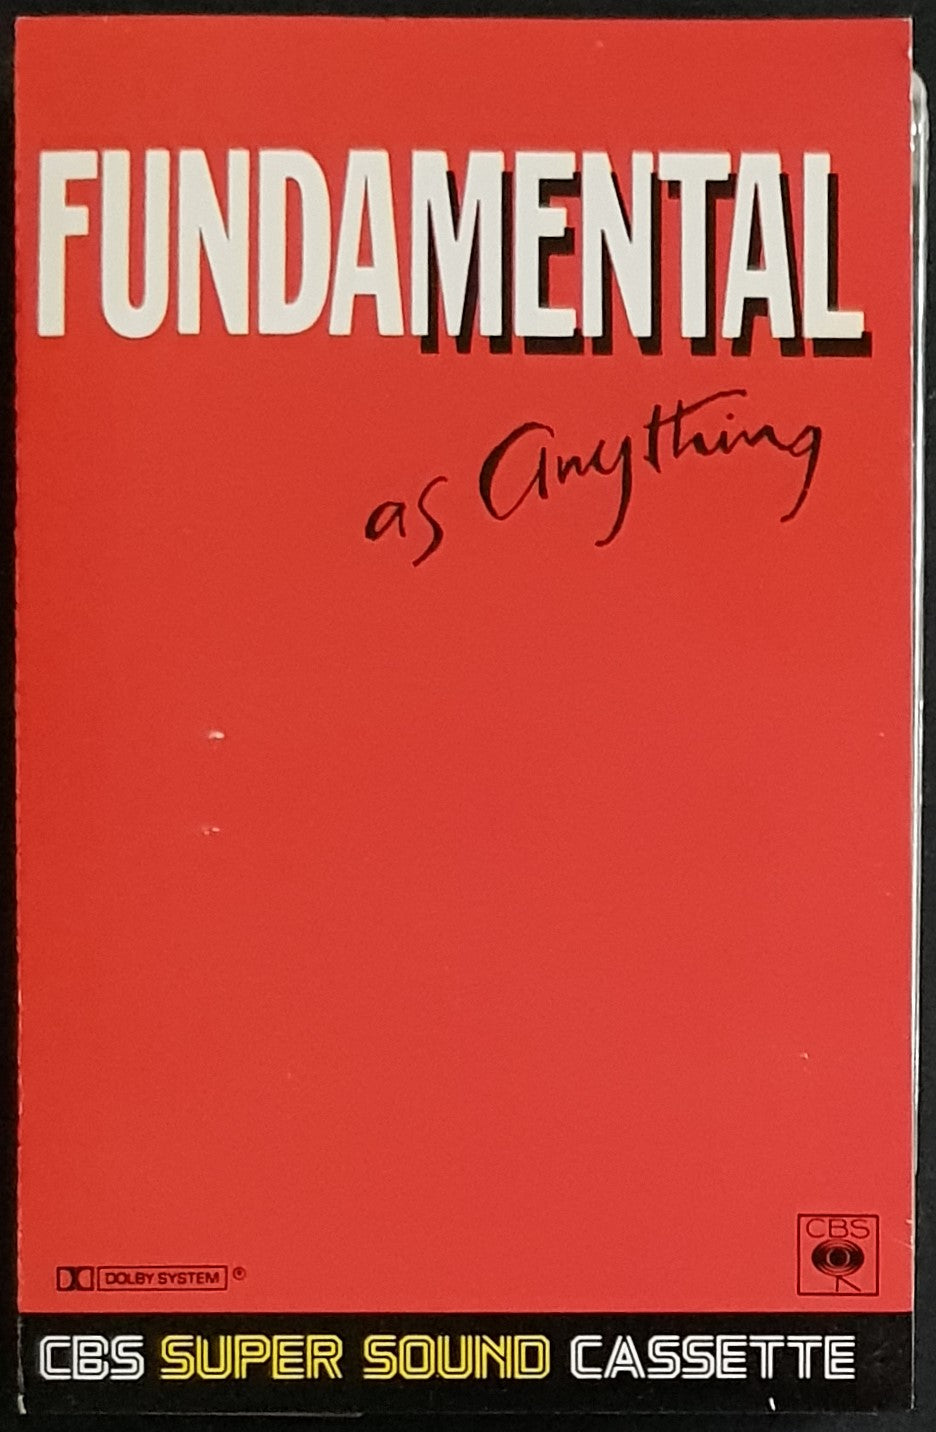 Mental As Anything - Fundamental As Anything